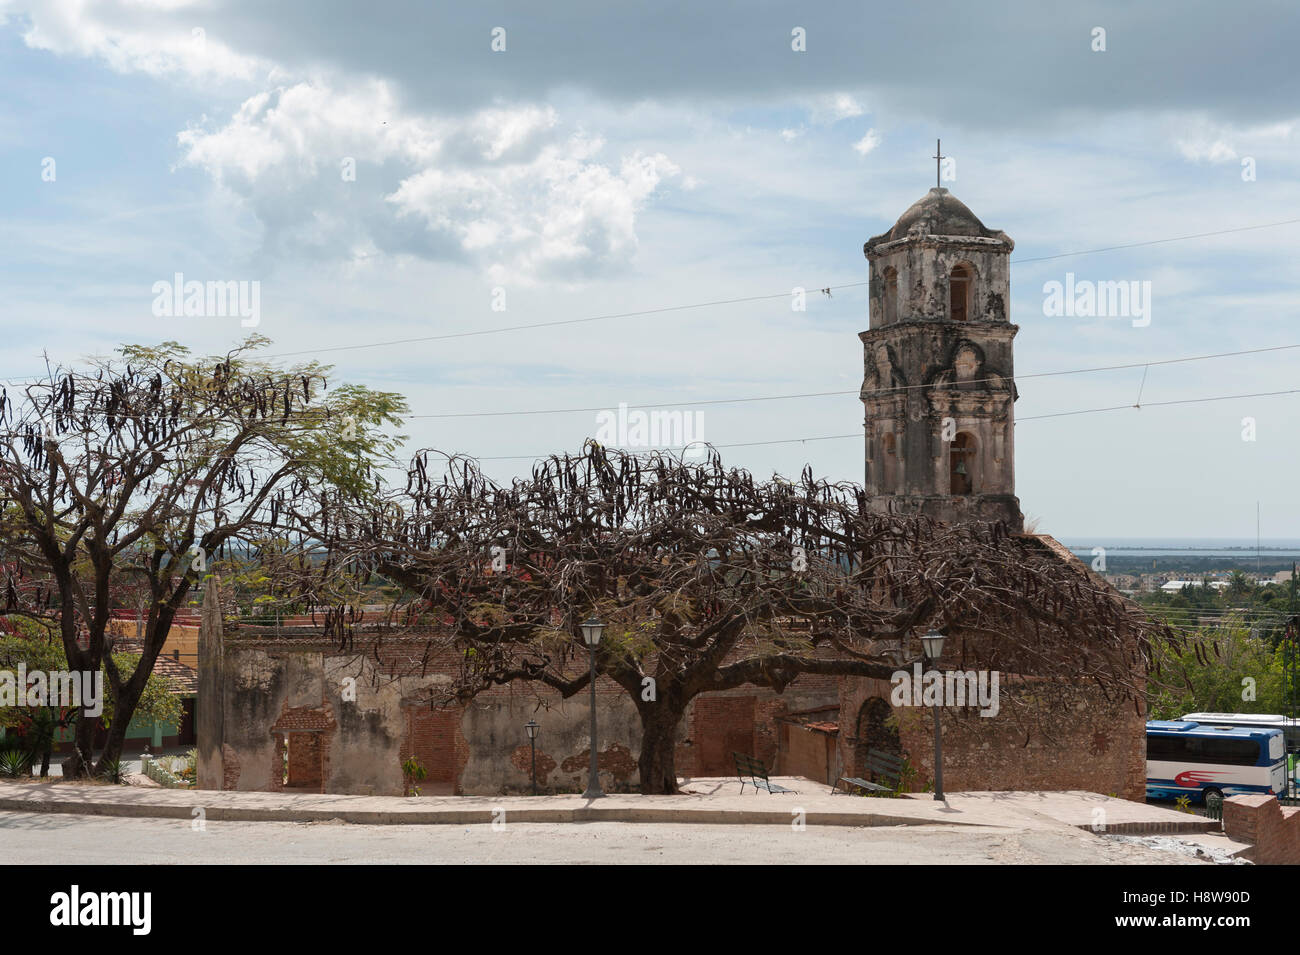 Old colonial church ruins in Trinidad, Cuba Stock Photo